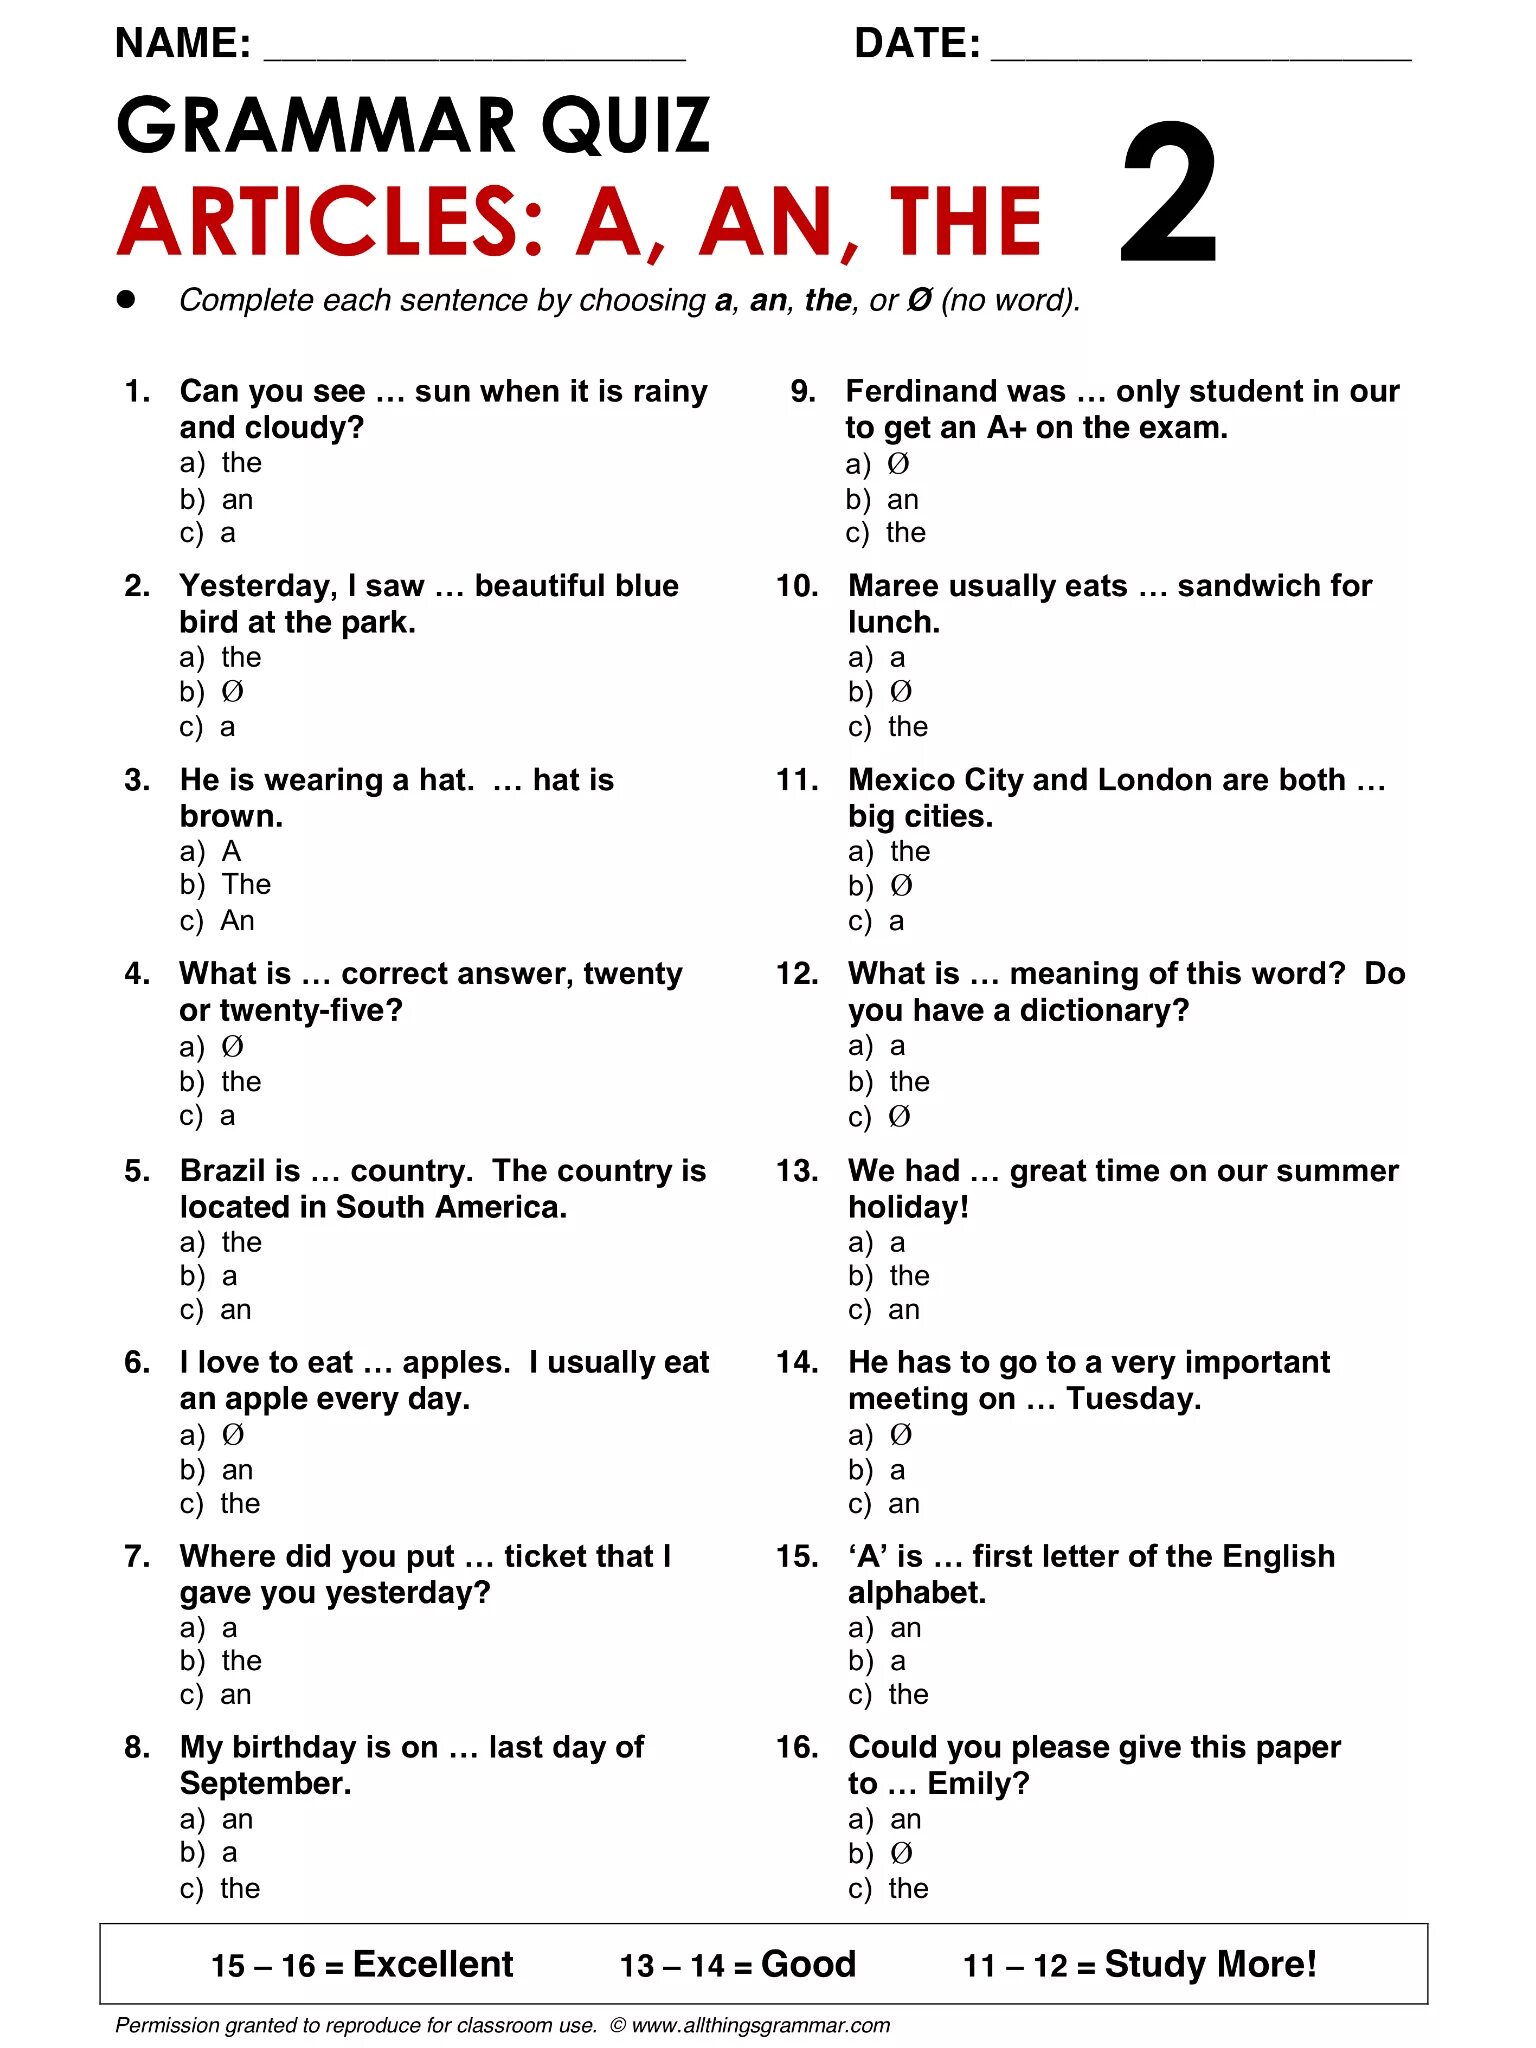 Тест английский язык pdf. Тест на артикли в английском языке. Артикли в английском языке Worksheets. Артикли Worksheets. Упражнения на артикли в английском языке Worksheets.